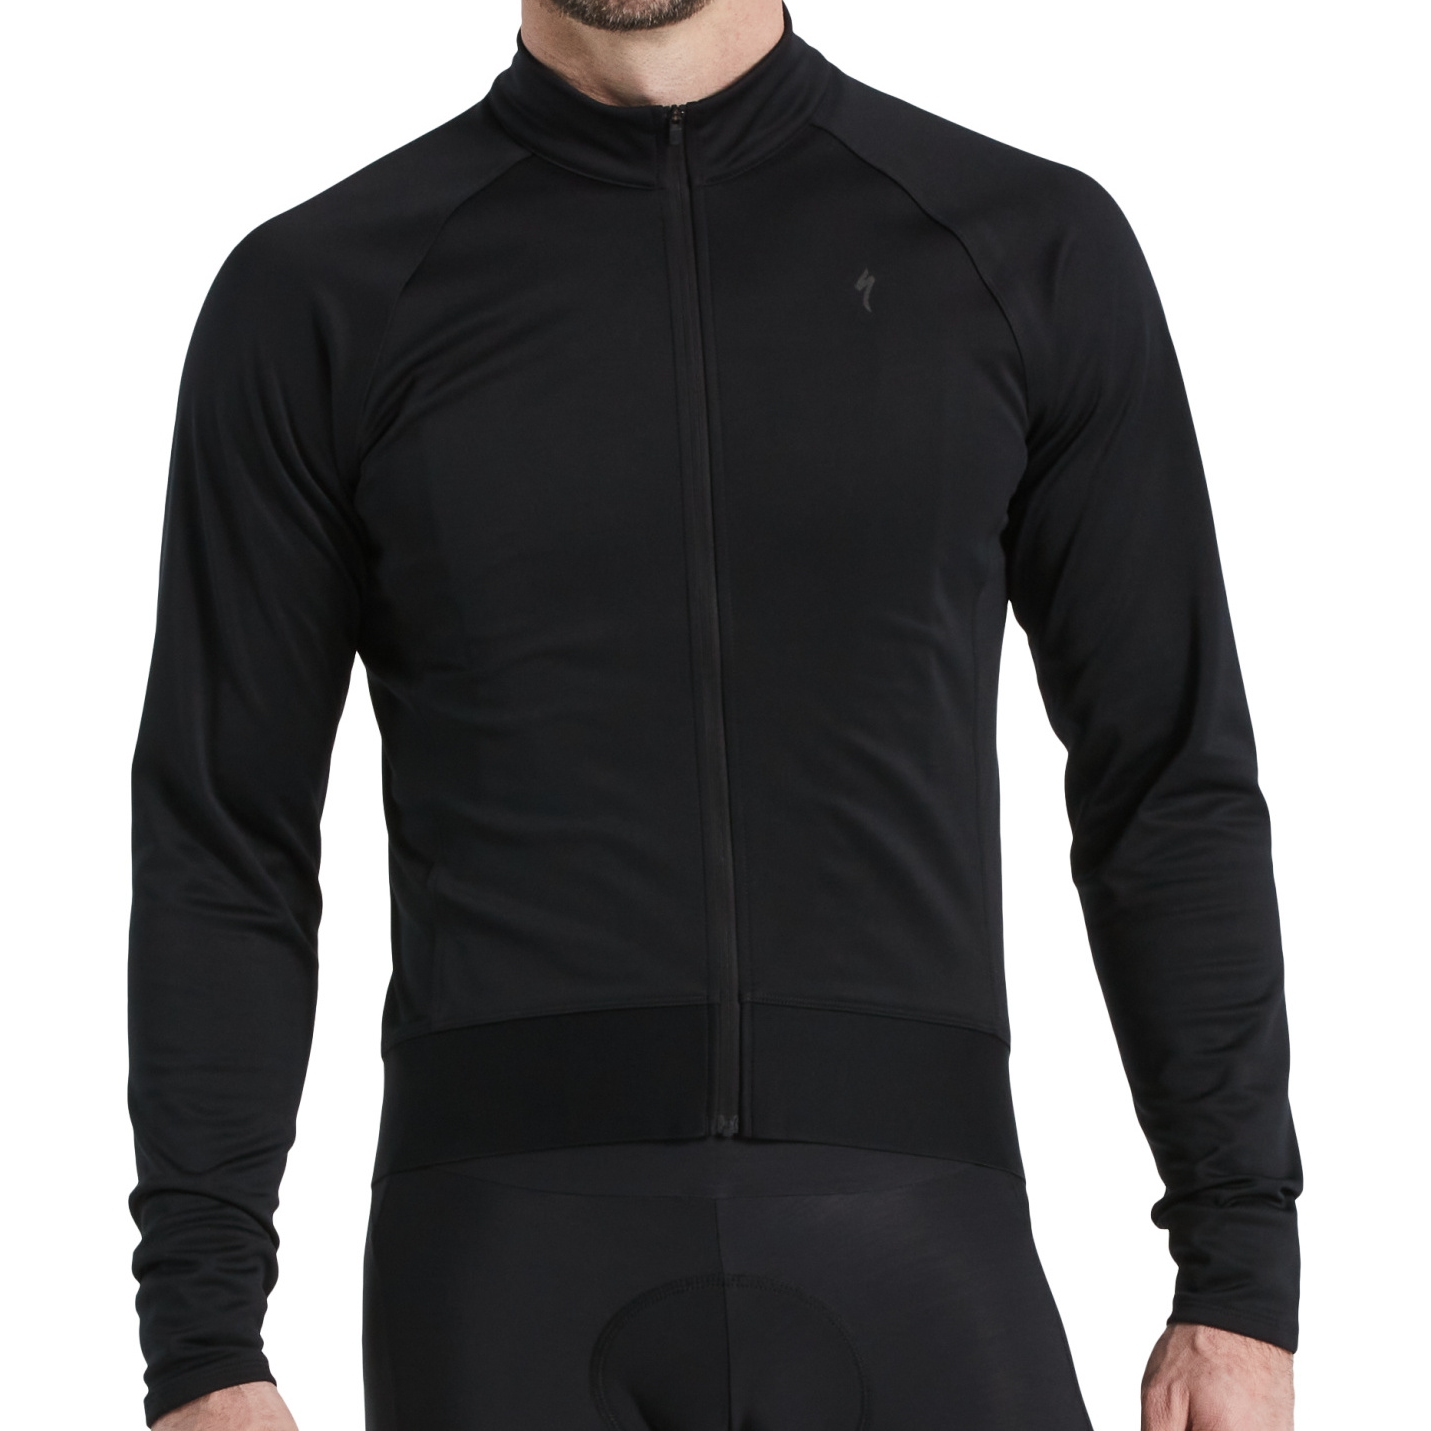 Specialized Men's SL Expert Long Sleeve Thermal Jersey Black / XXL